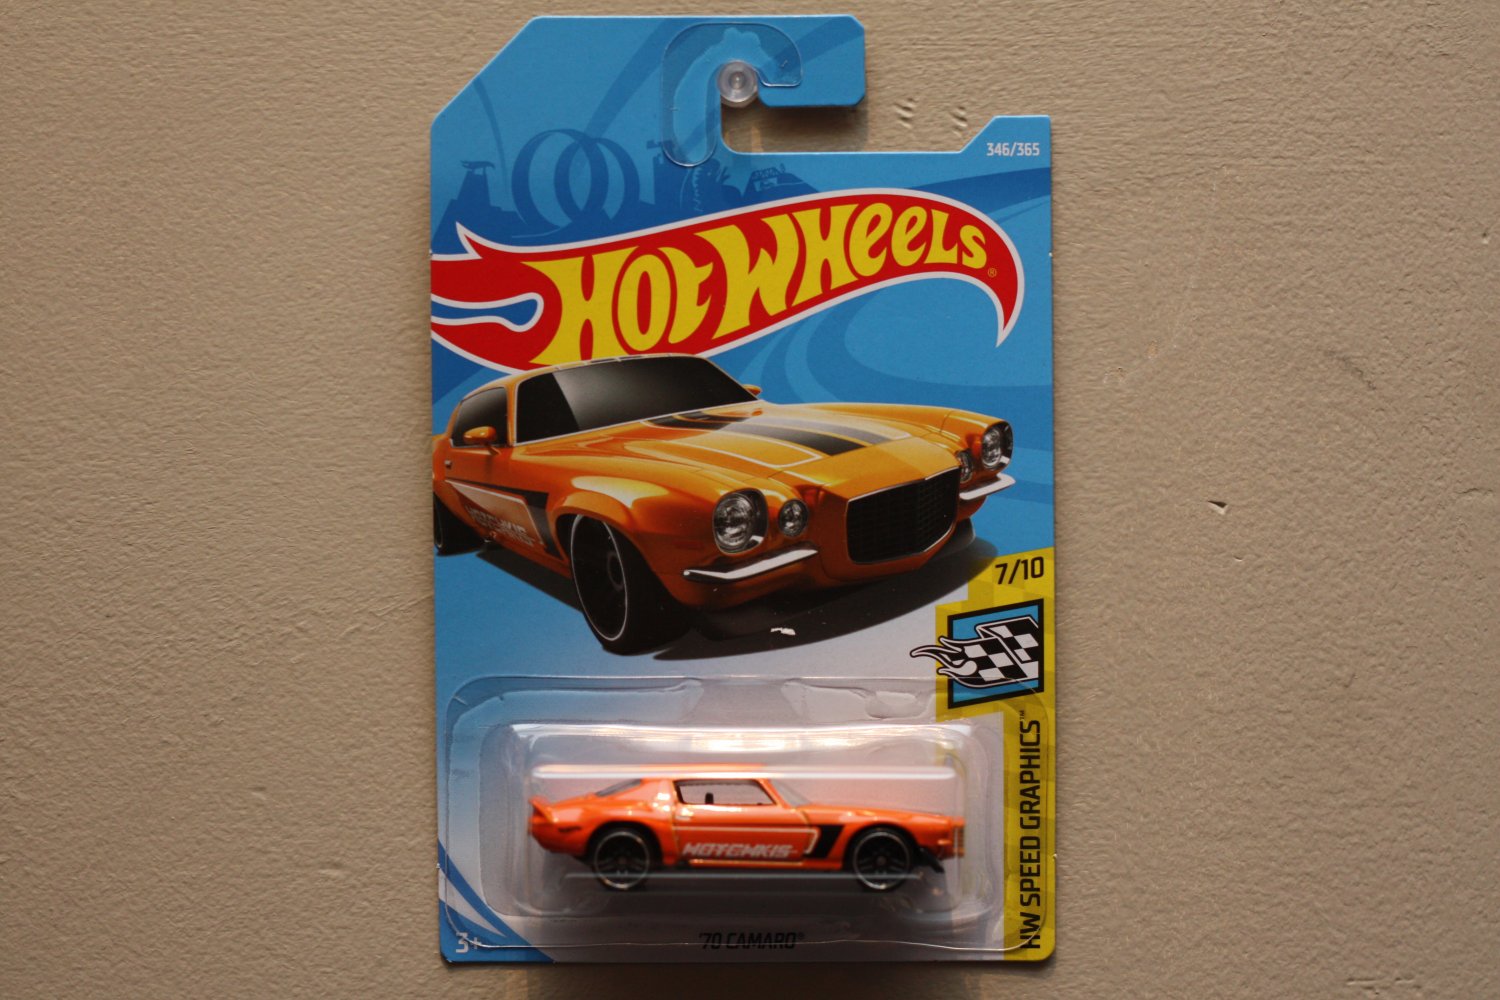 Hot Wheels 2018 Speed Graphics Series #346 '70 Camaro Orange HOTCHKIS 